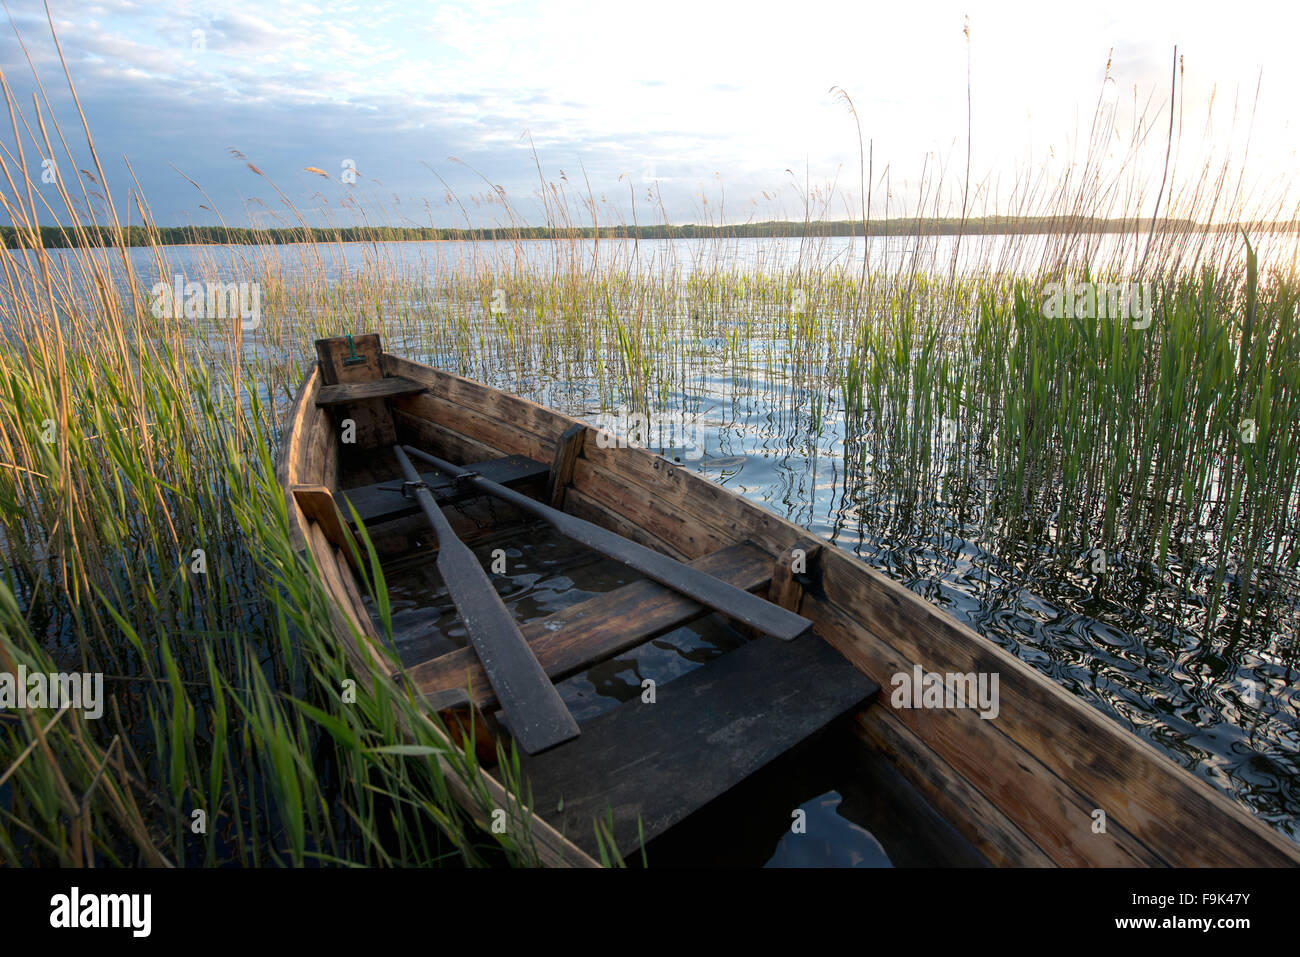 Botes de madera, jezioro drawsko drawsko (lago), Pomerania (Lakeland pojezierze pomorskie), Pomerania Occidental, Polonia Foto de stock